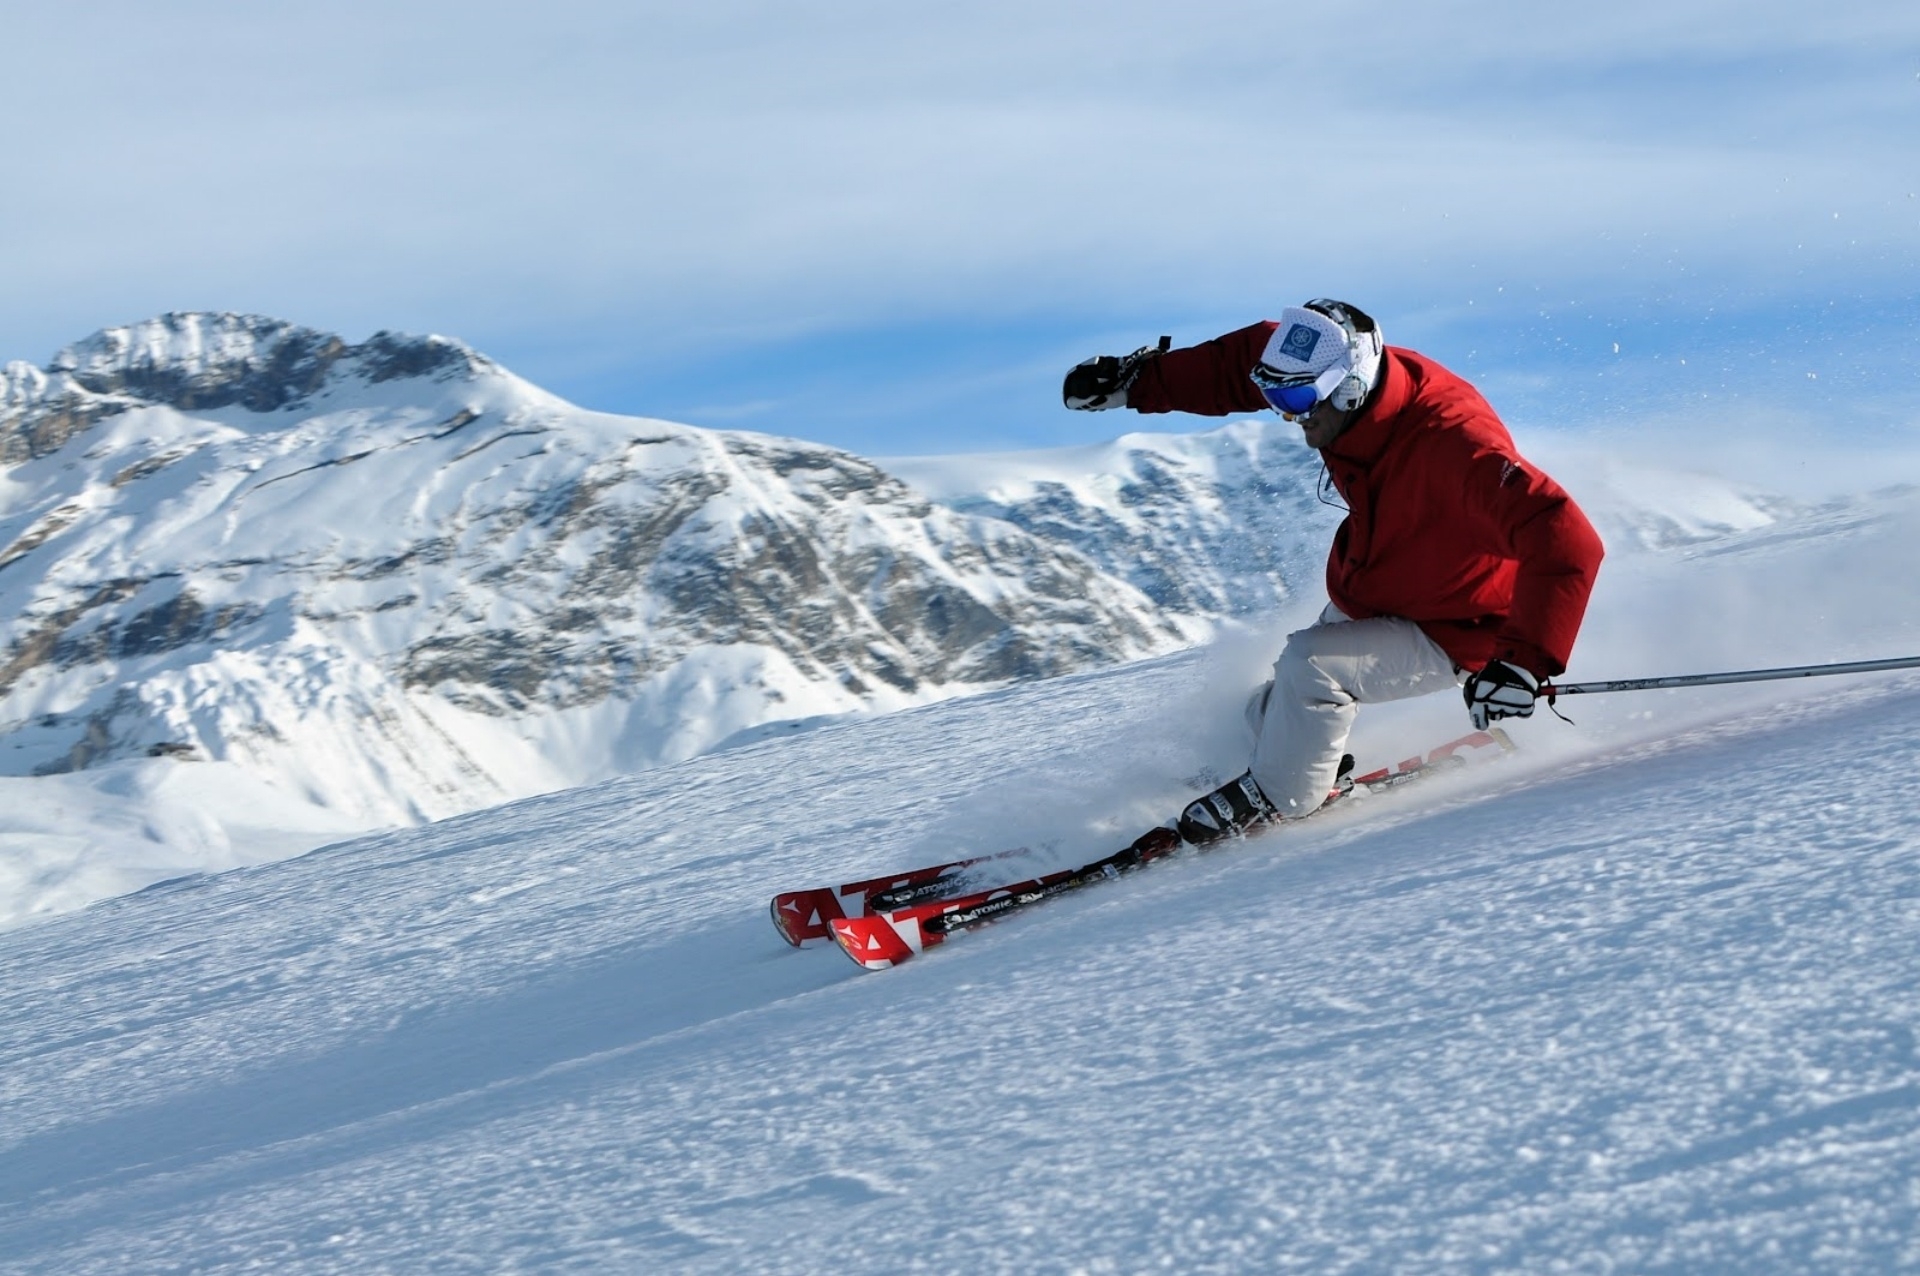 26033 Ski Wallpaper Images Stock Photos  Vectors  Shutterstock